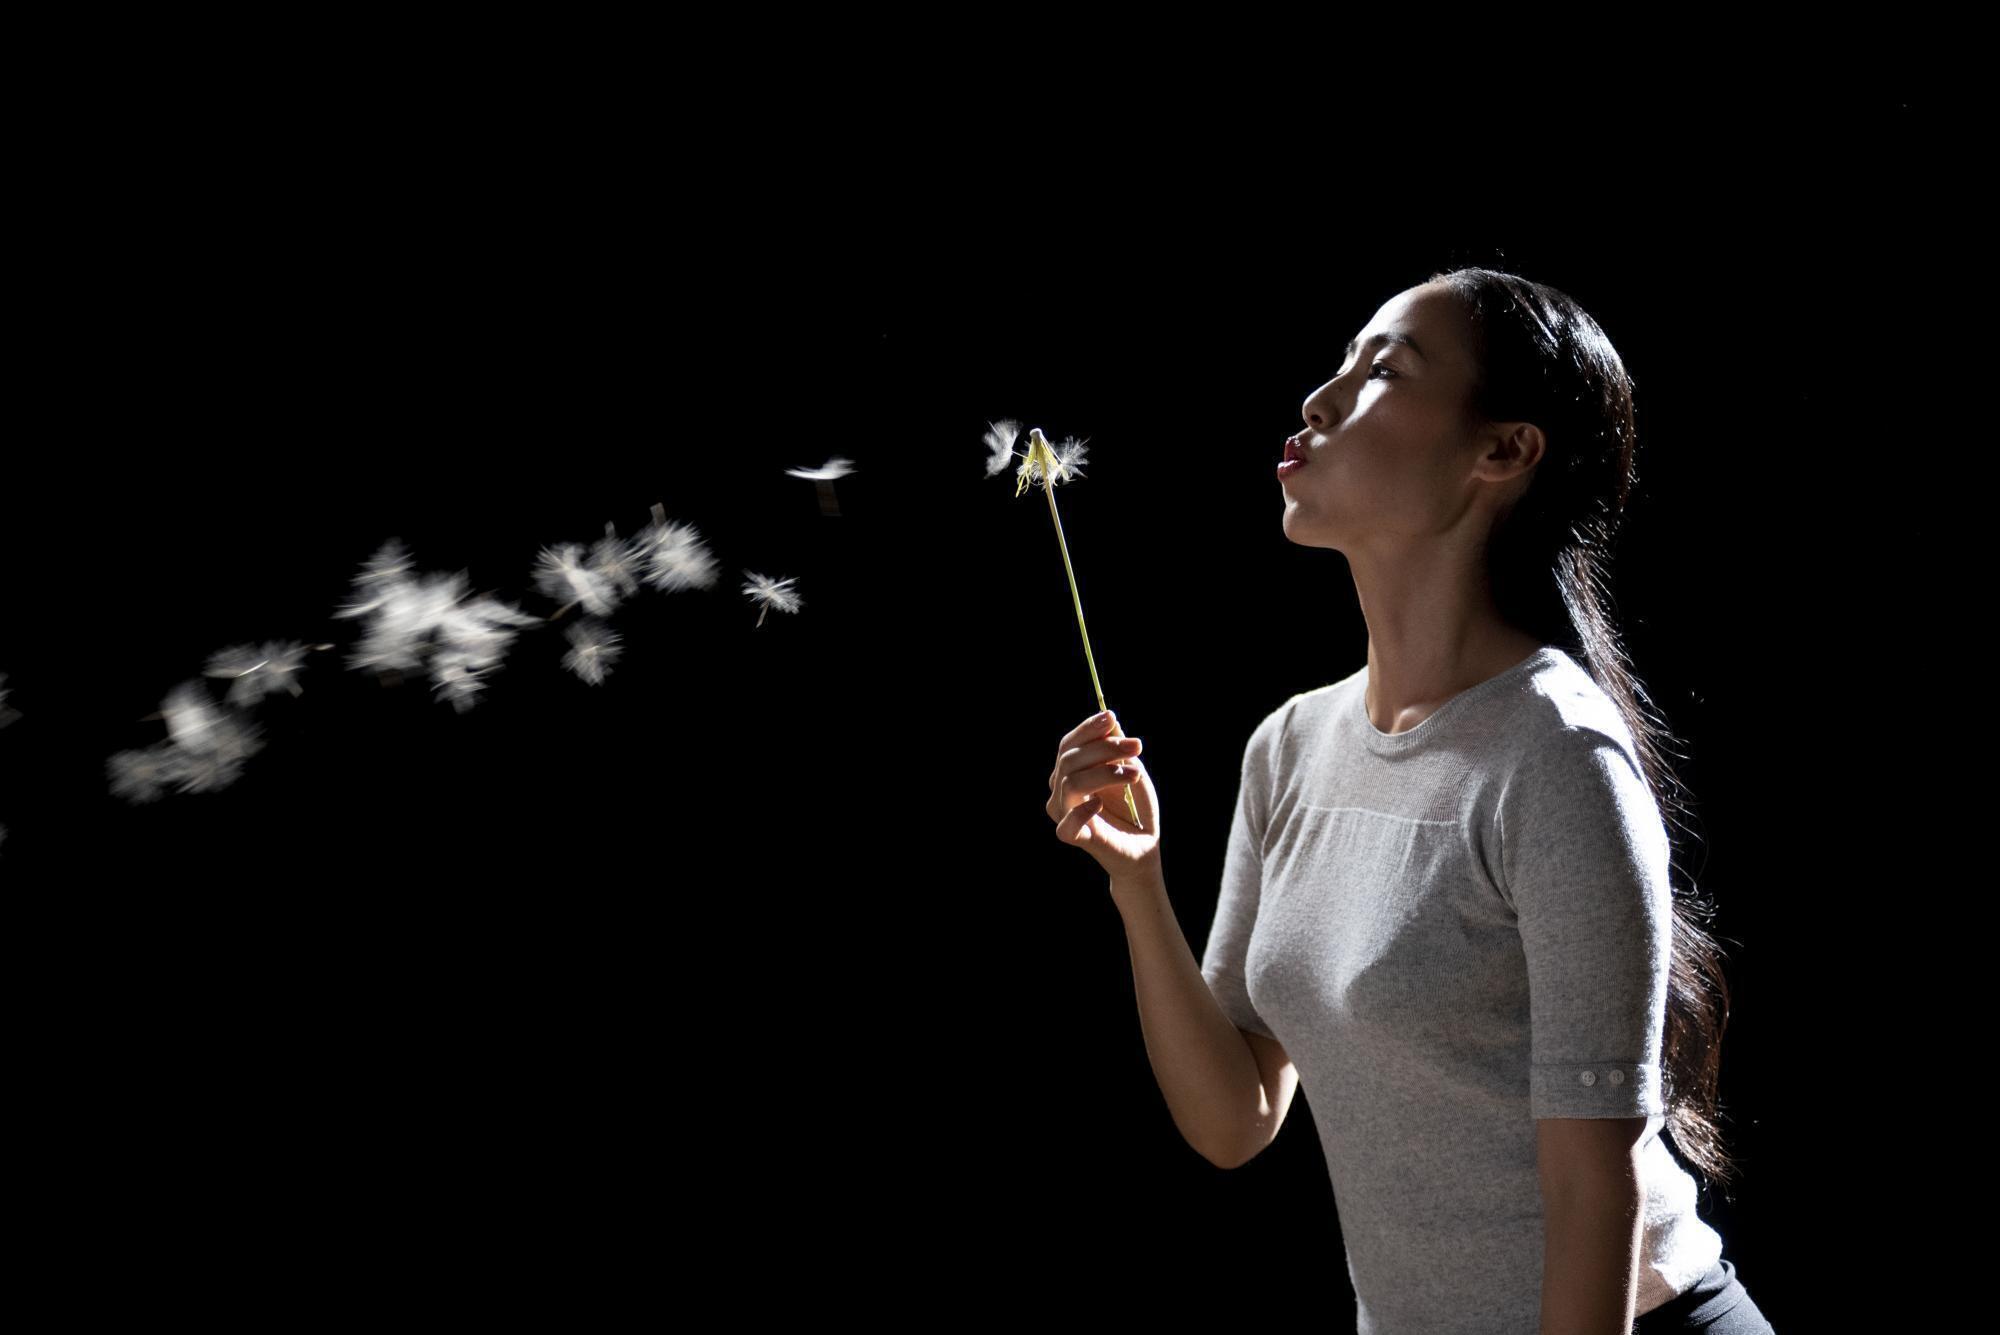 A woman blowing on a dandelion